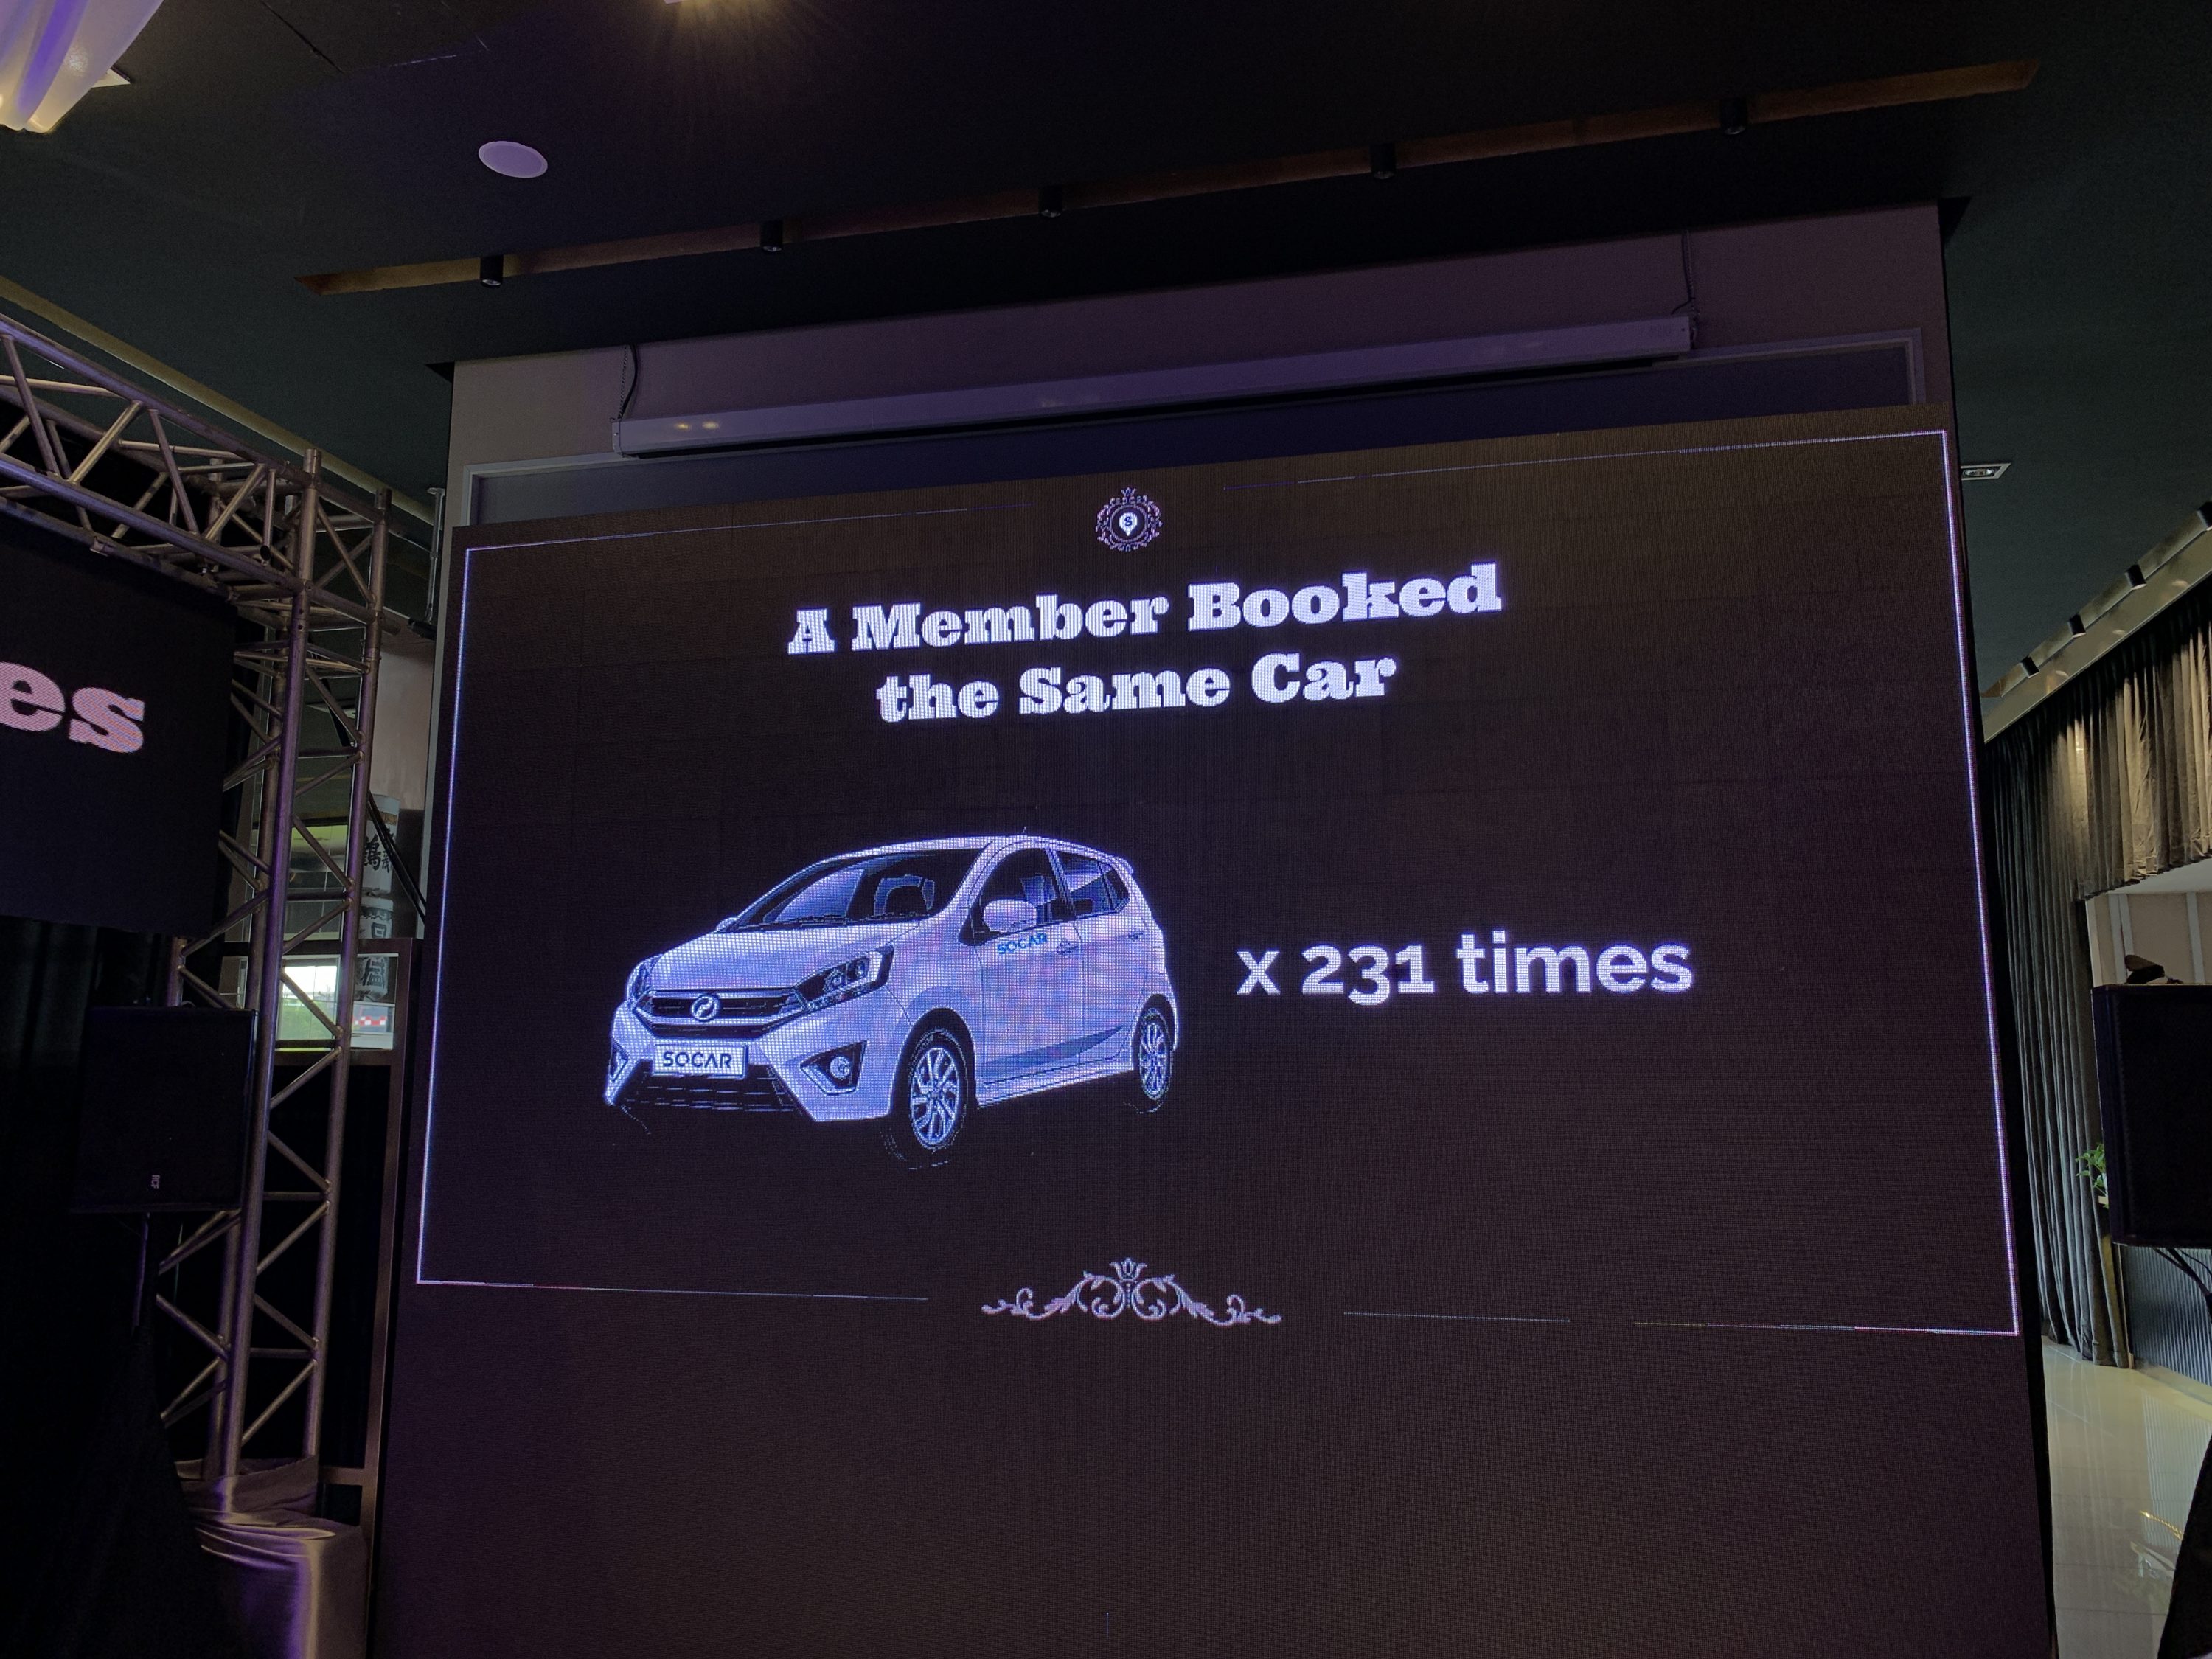 SOCAR Malaysia now has 2,000 cars in its fleet 